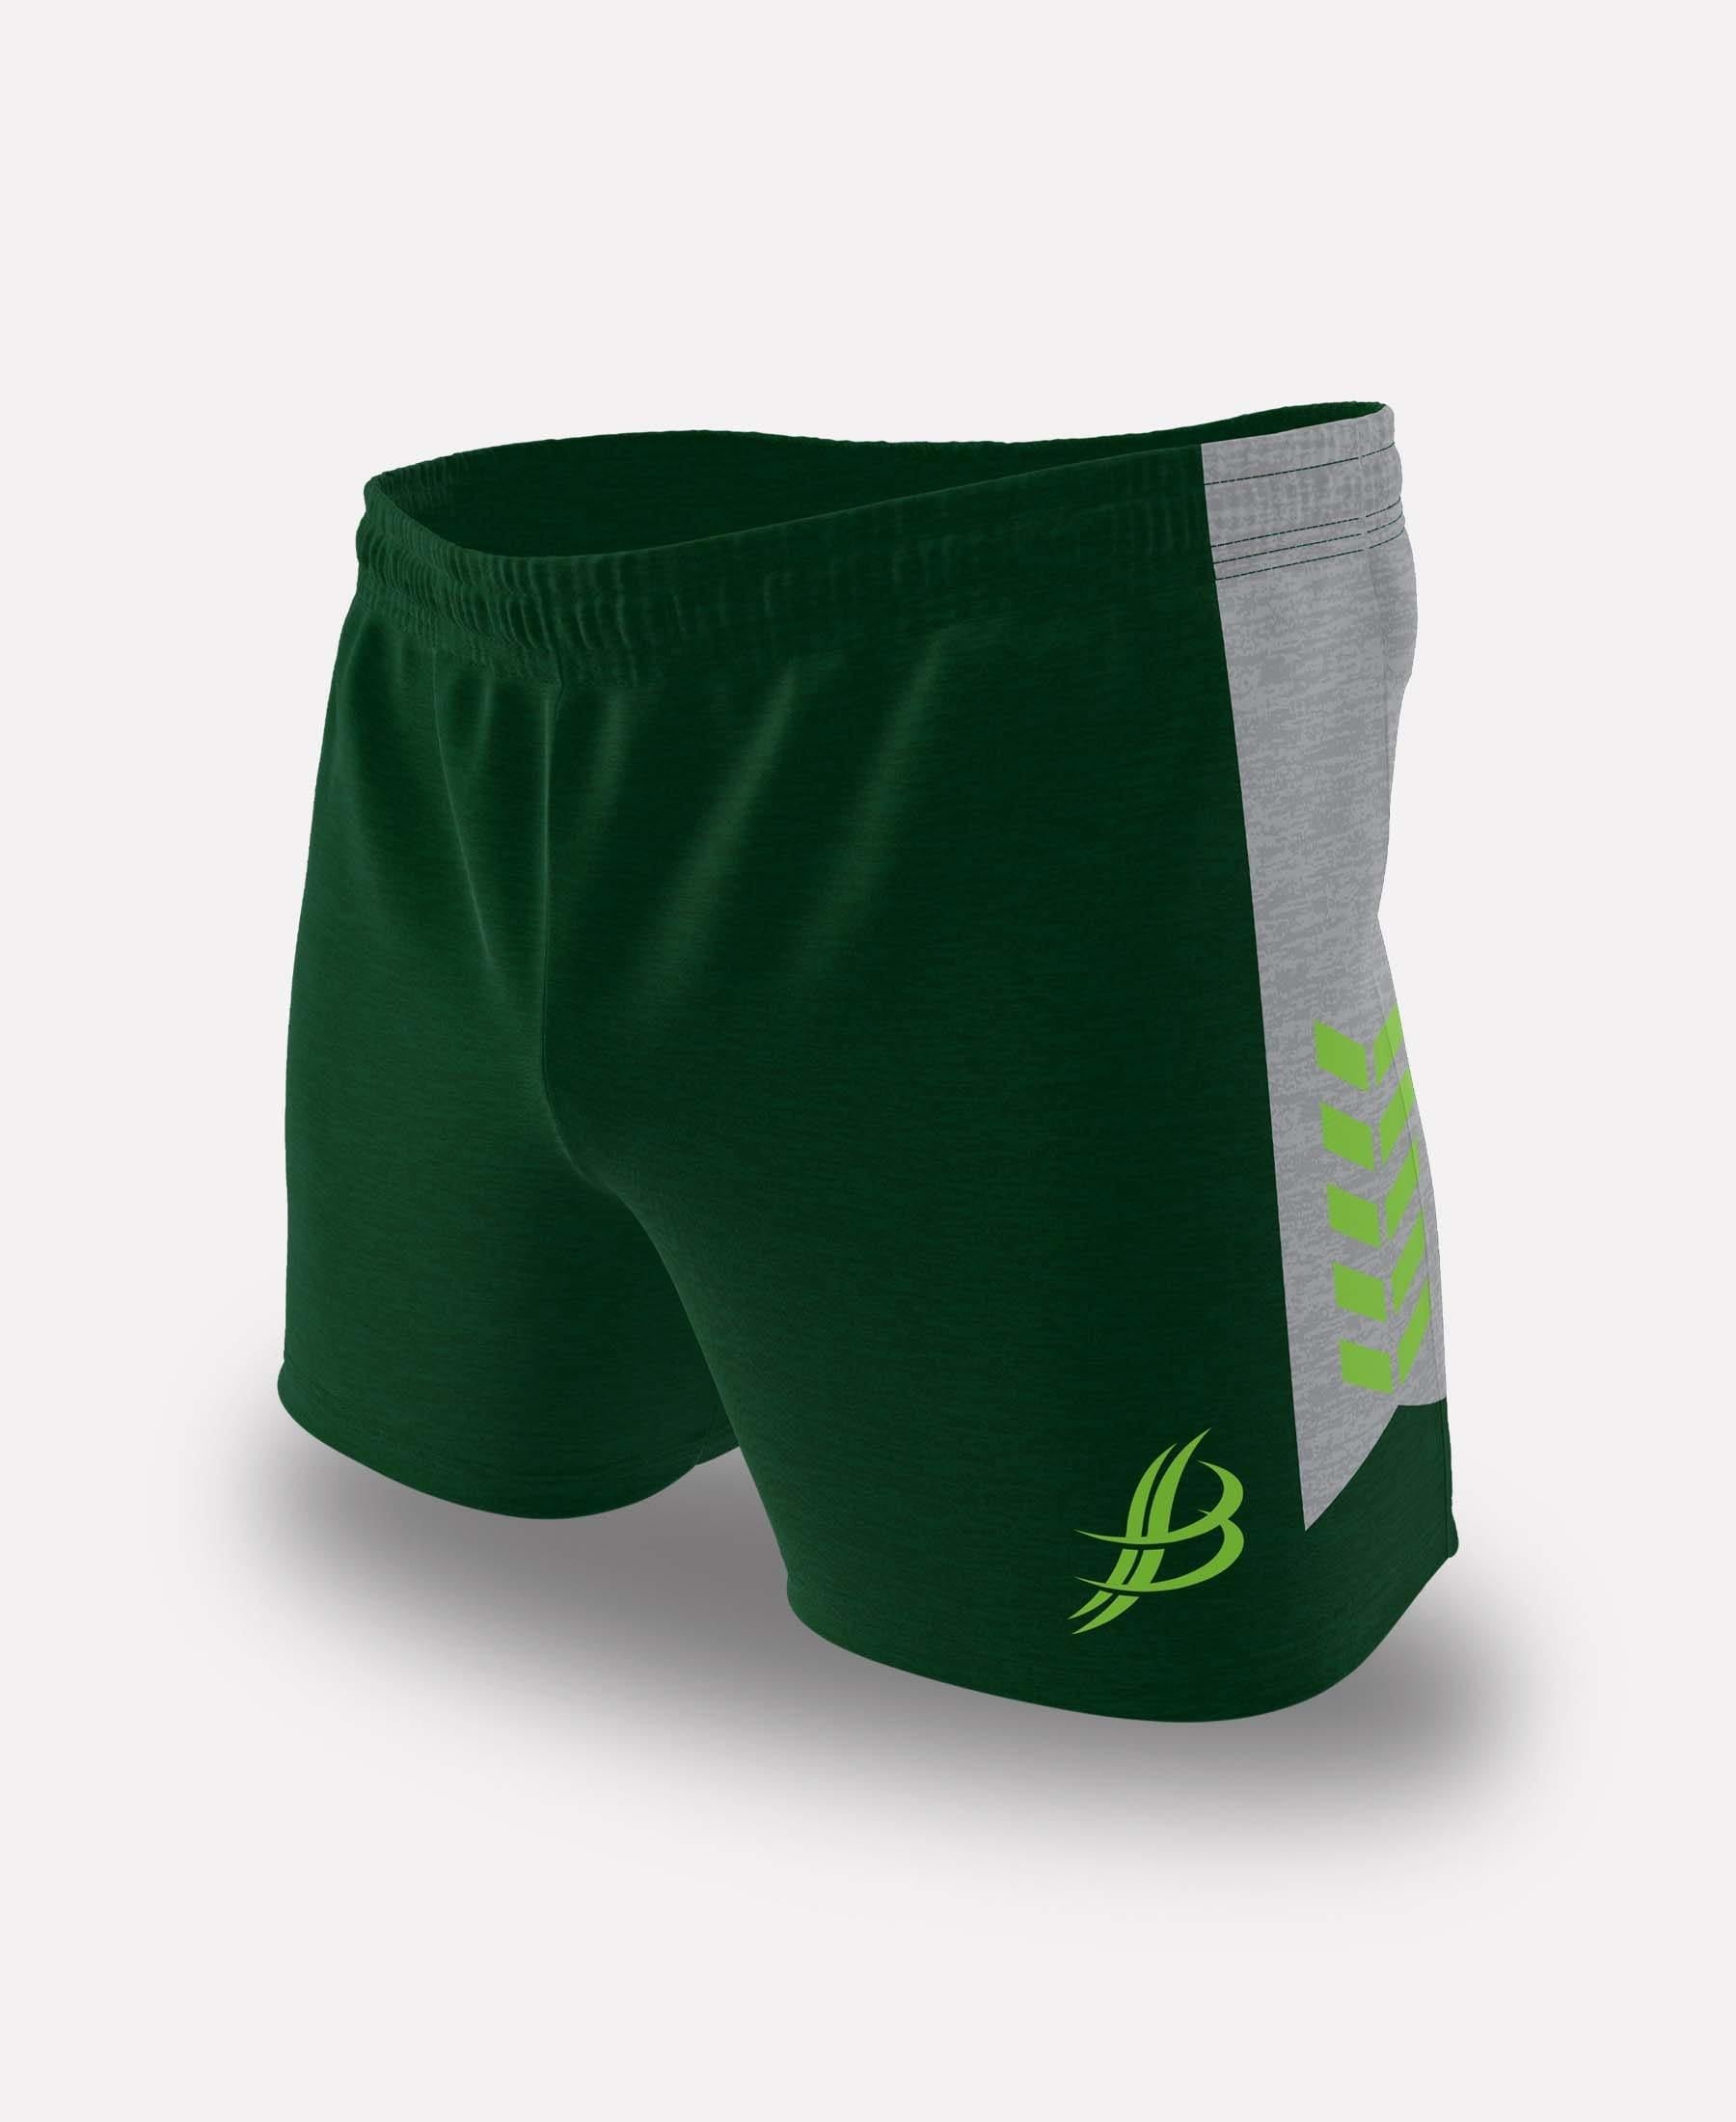 Bua20 Shorts Kids Aussie Green/Grey/Lime Green - Bourke Sports Limited